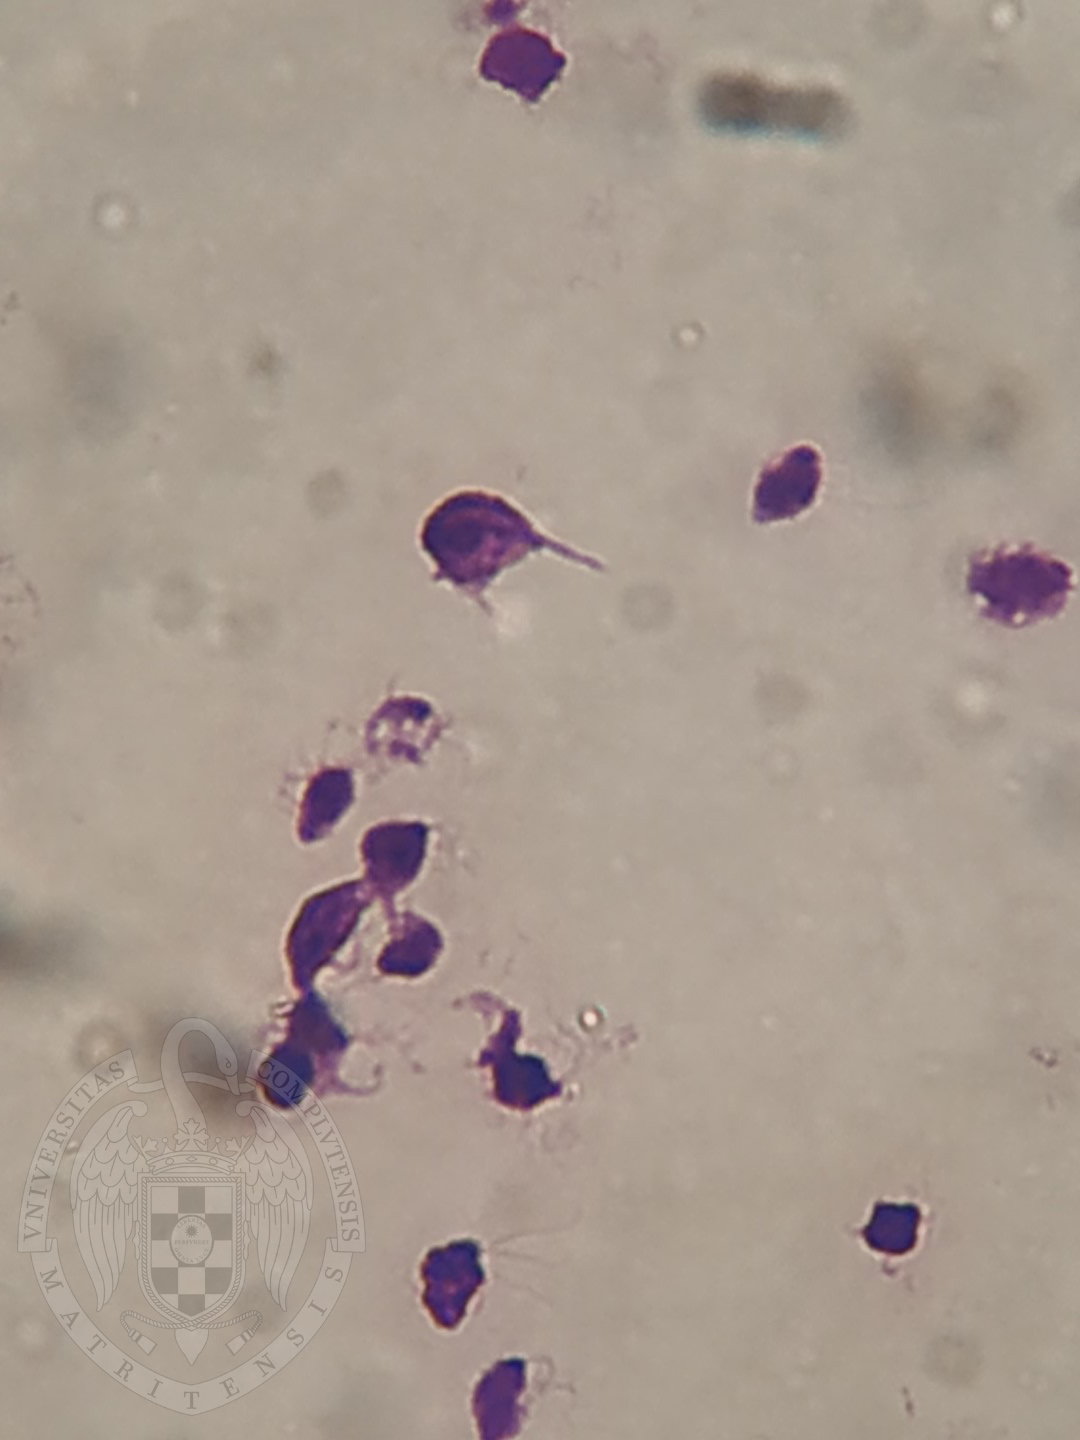 trypanosoma Trichomonas)